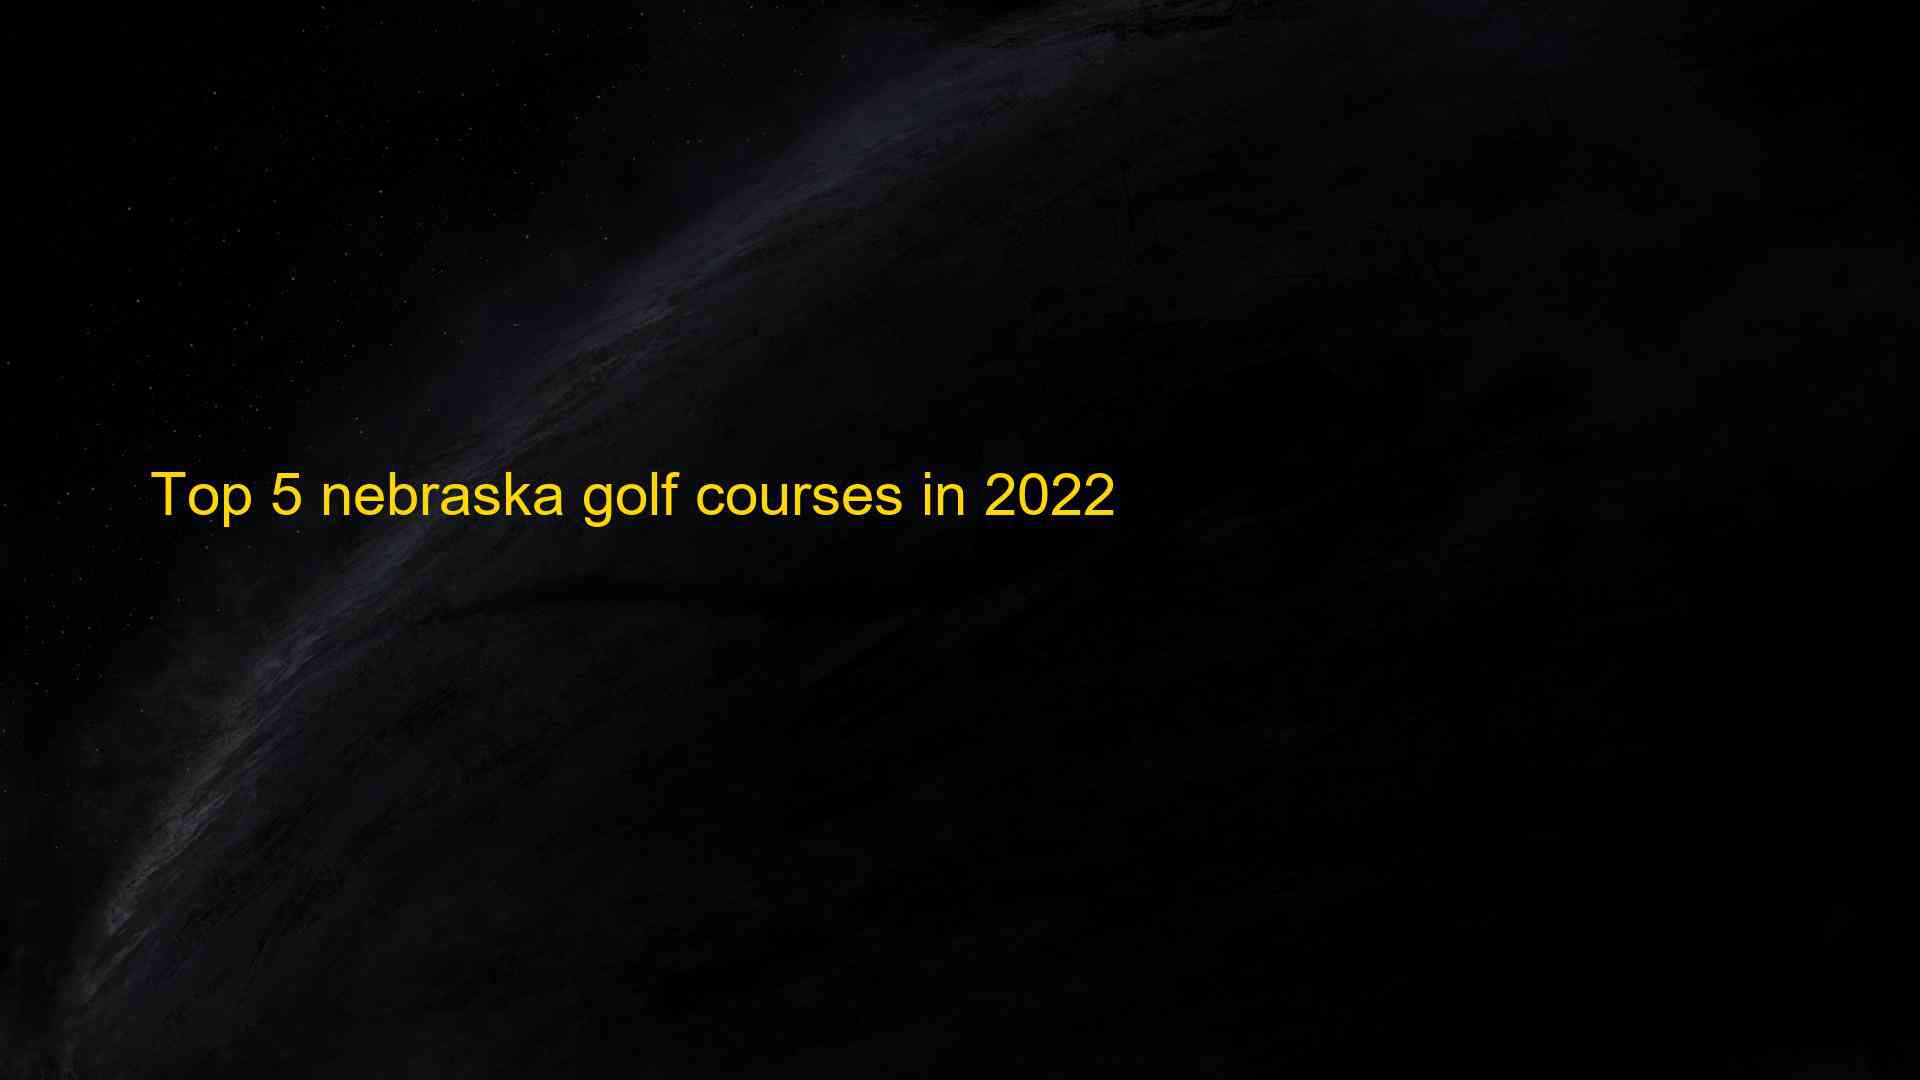 Top 5 nebraska golf courses in 2022 1660994011